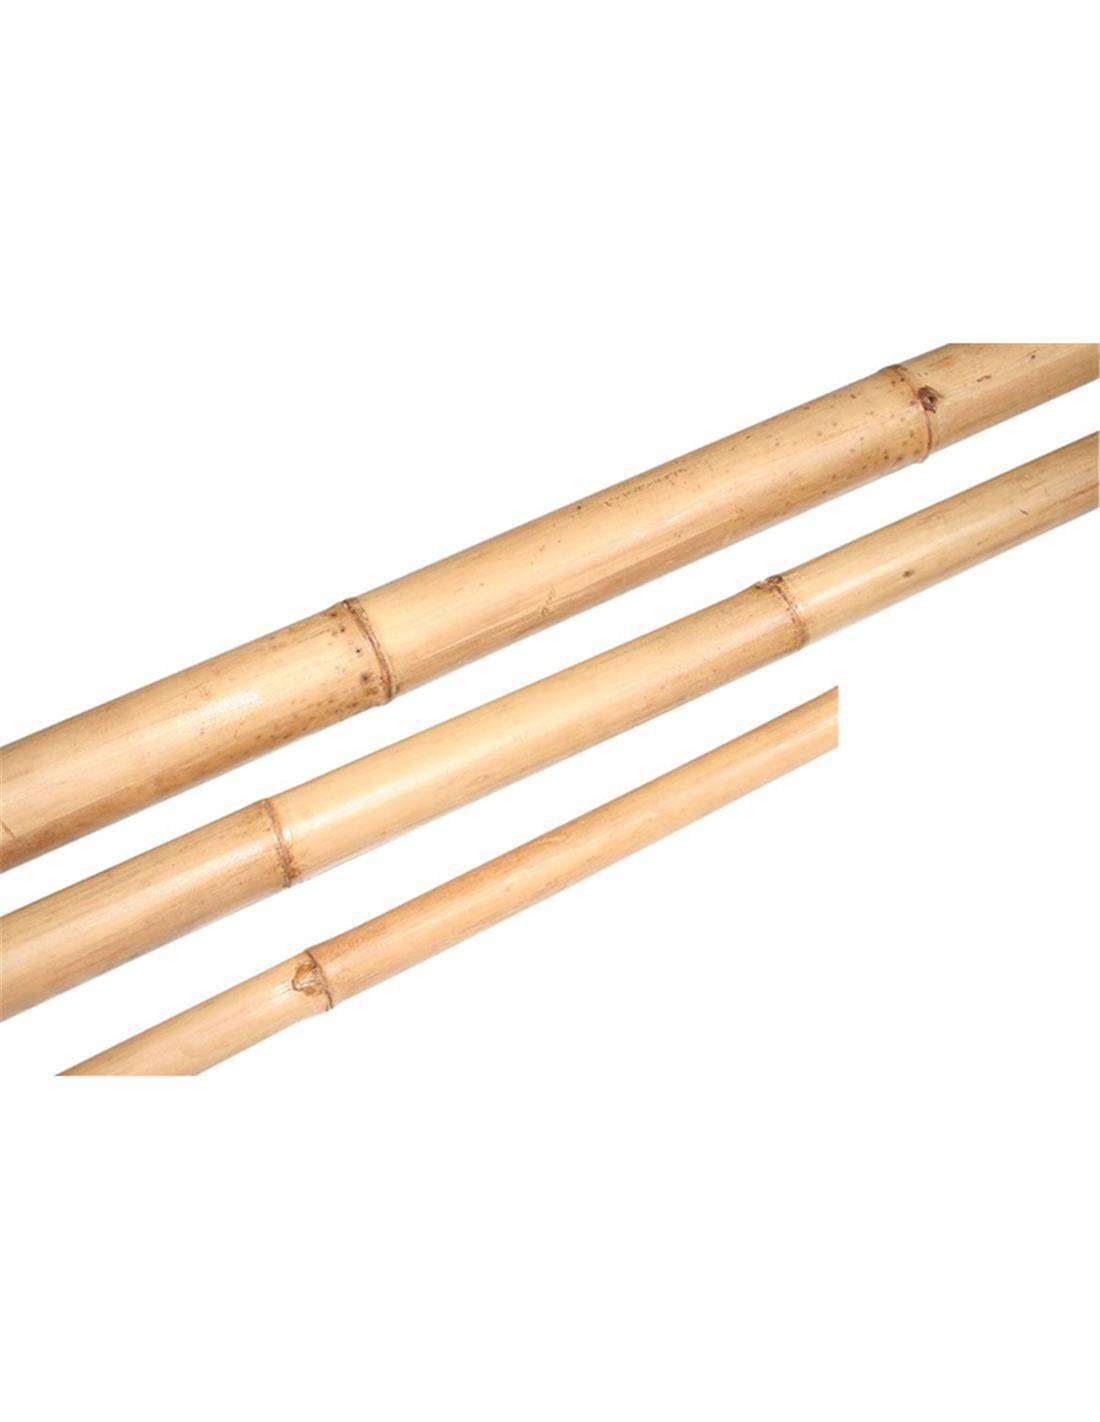 Stem Bamboo Laq. D4-5 L210.0 NATURAL